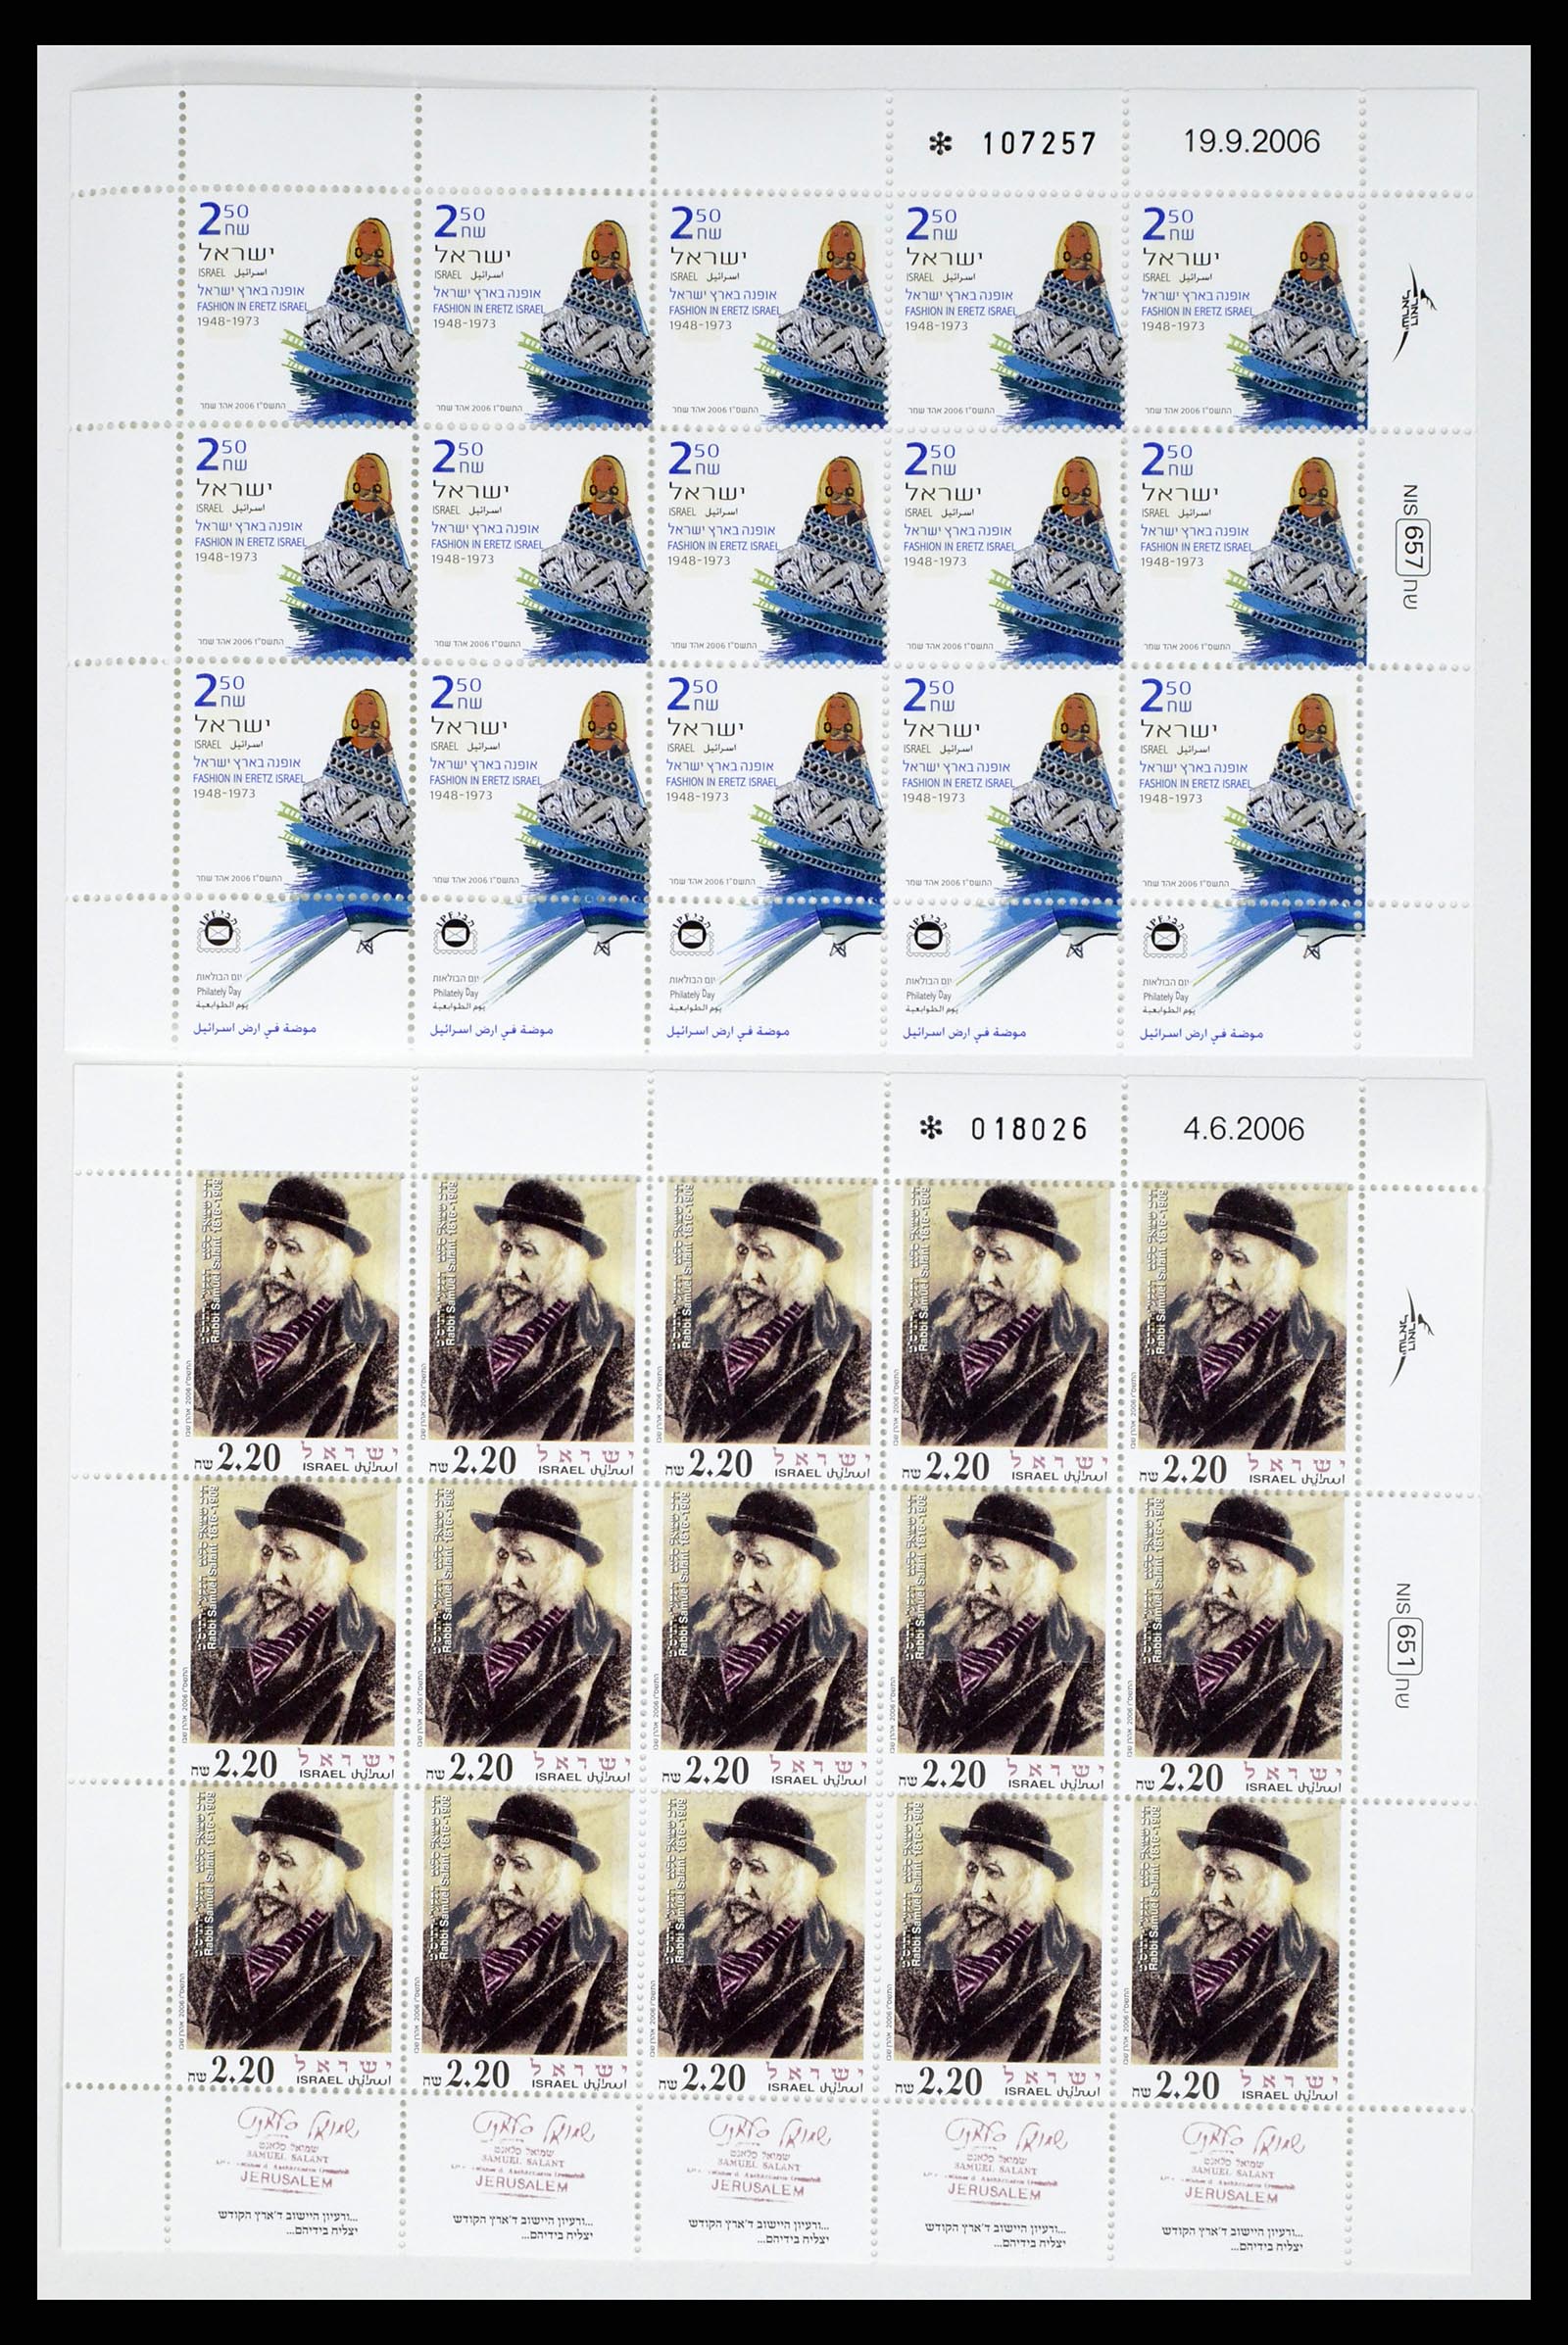 37779 019 - Stamp collection 37779 Israel sheetlets 1986-2009.